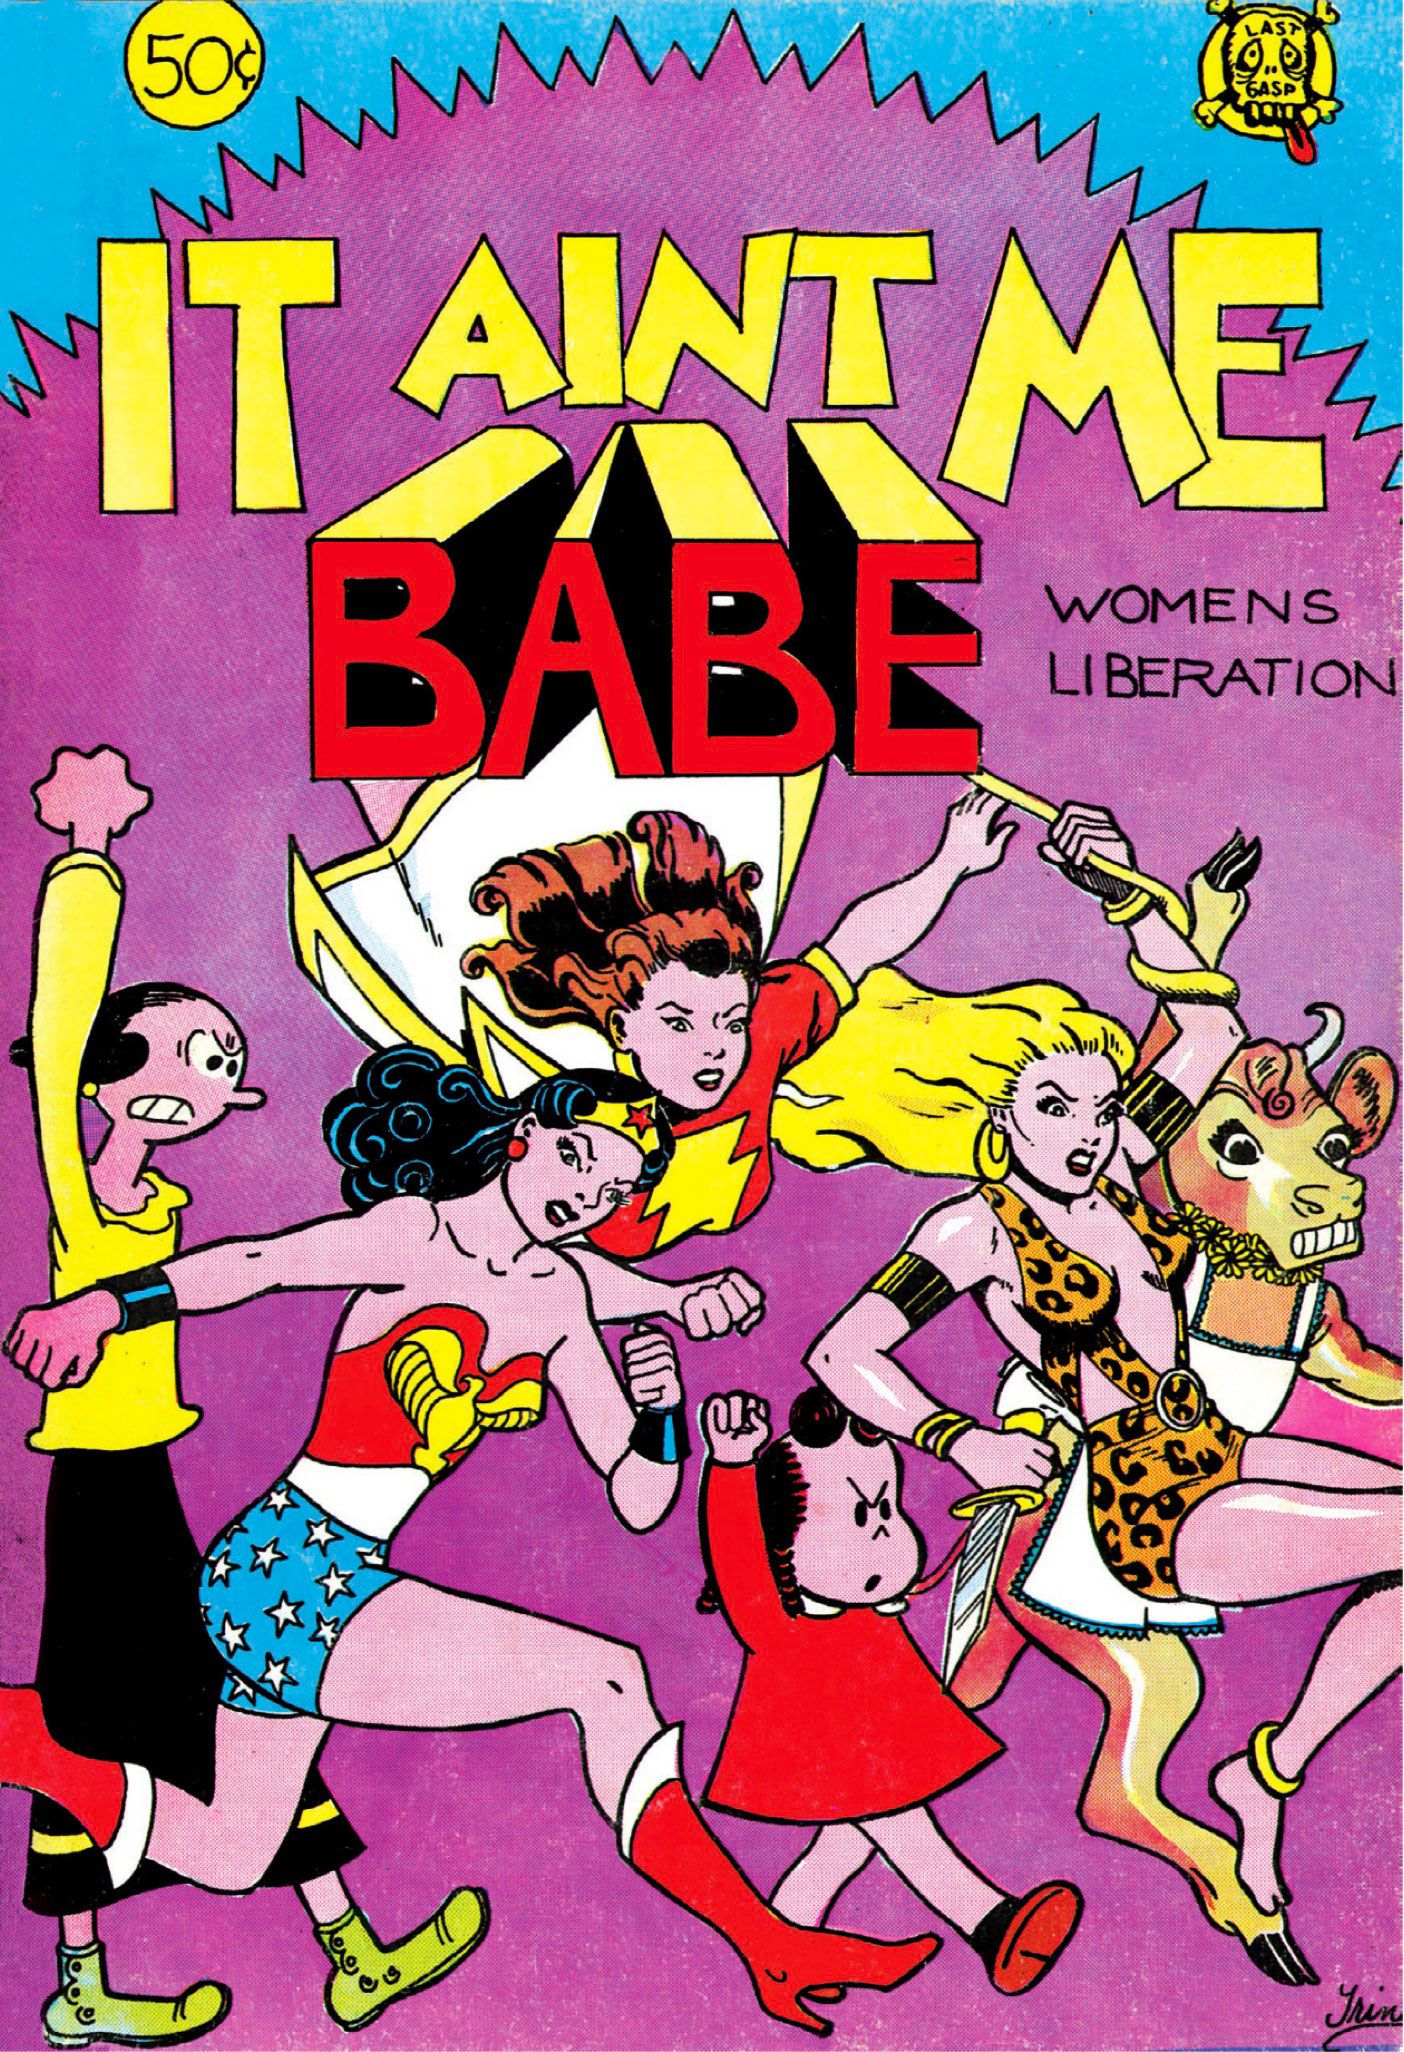 Trina Robbins is a Feminist Who Revolutionized Comics